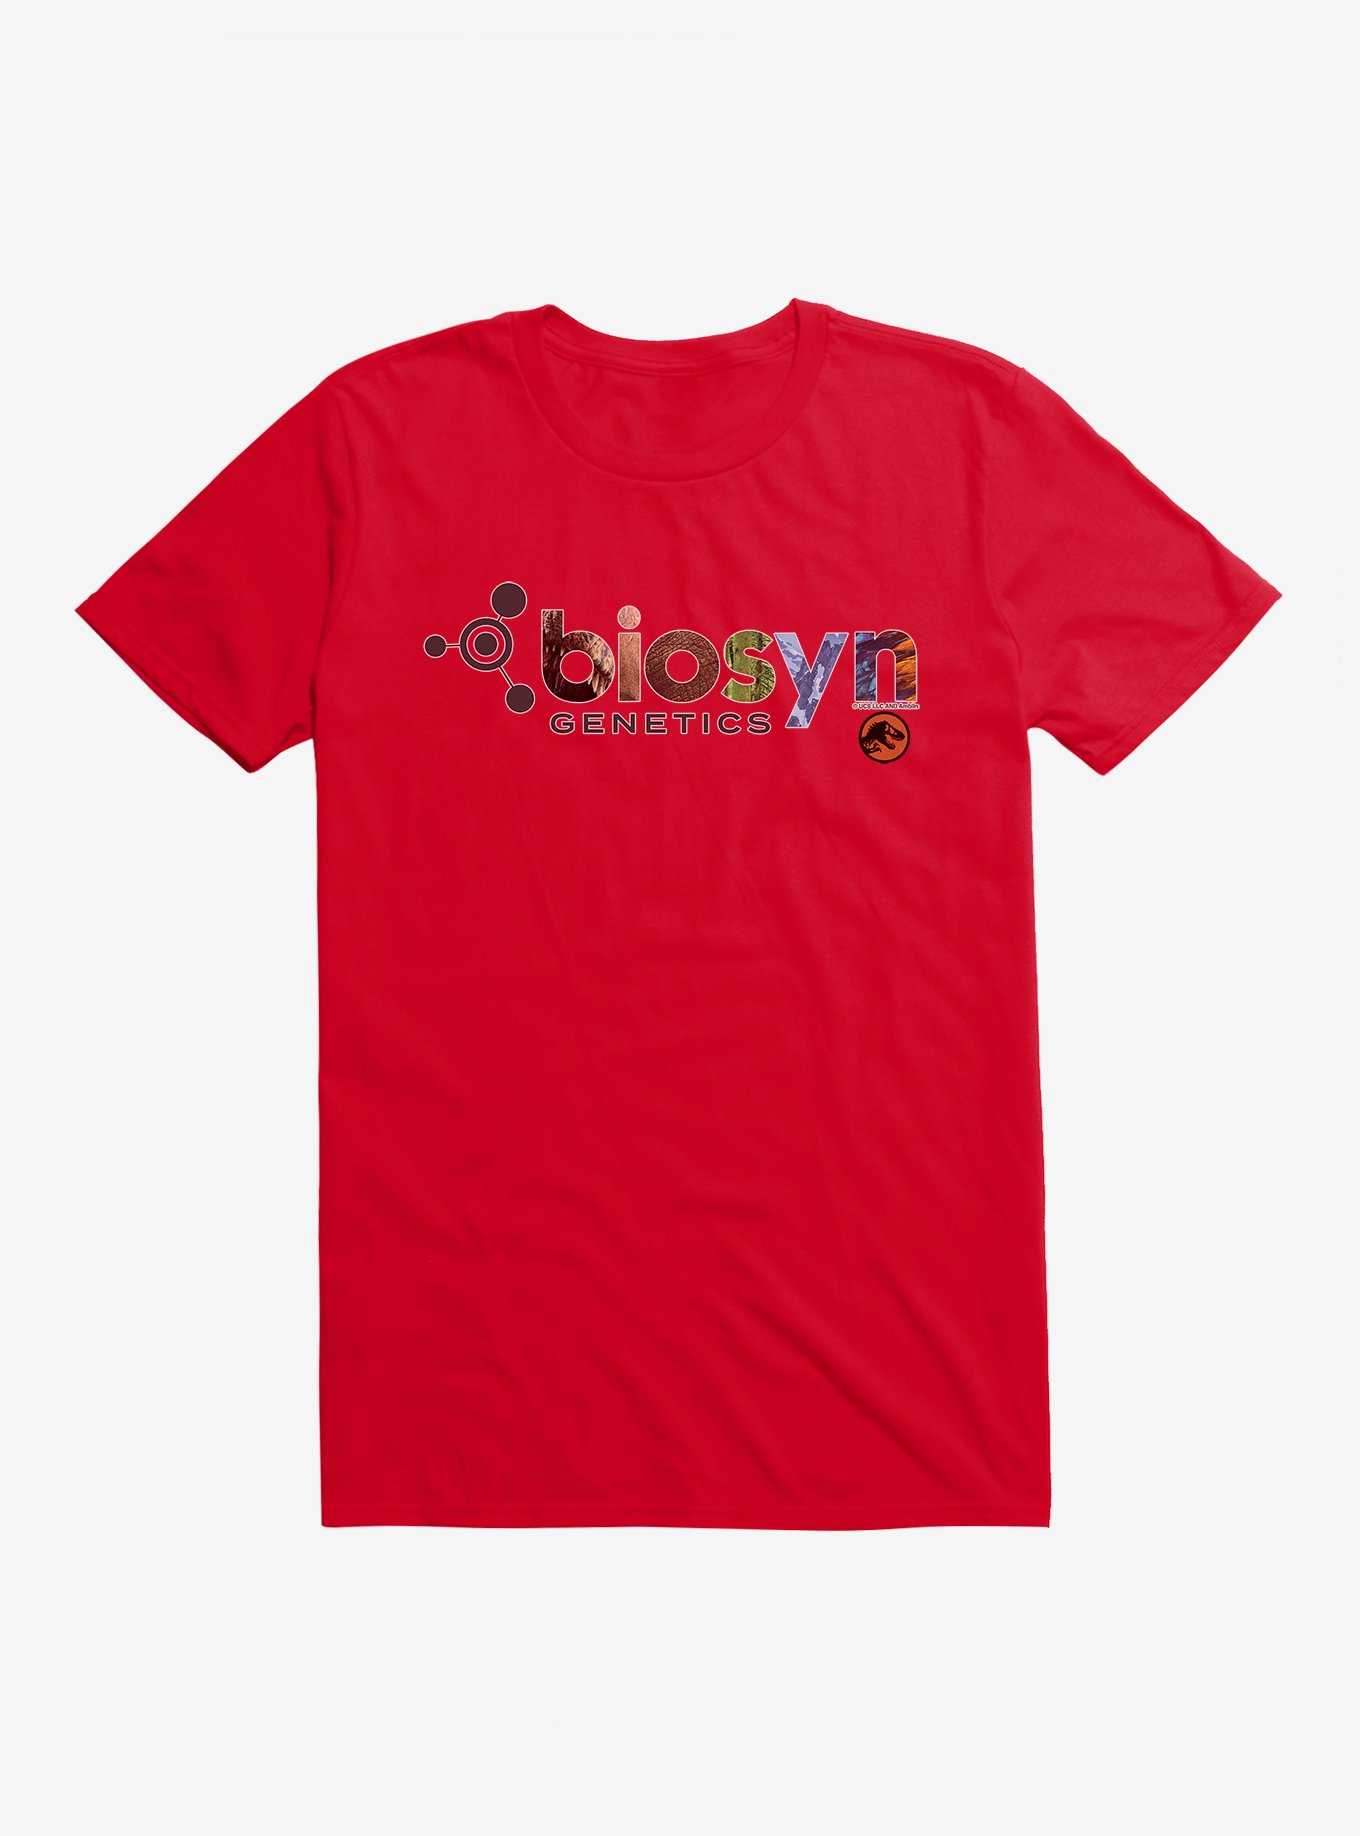 Jurassic World Dominion: BioSyn Genetics T-Shirt, RED, hi-res